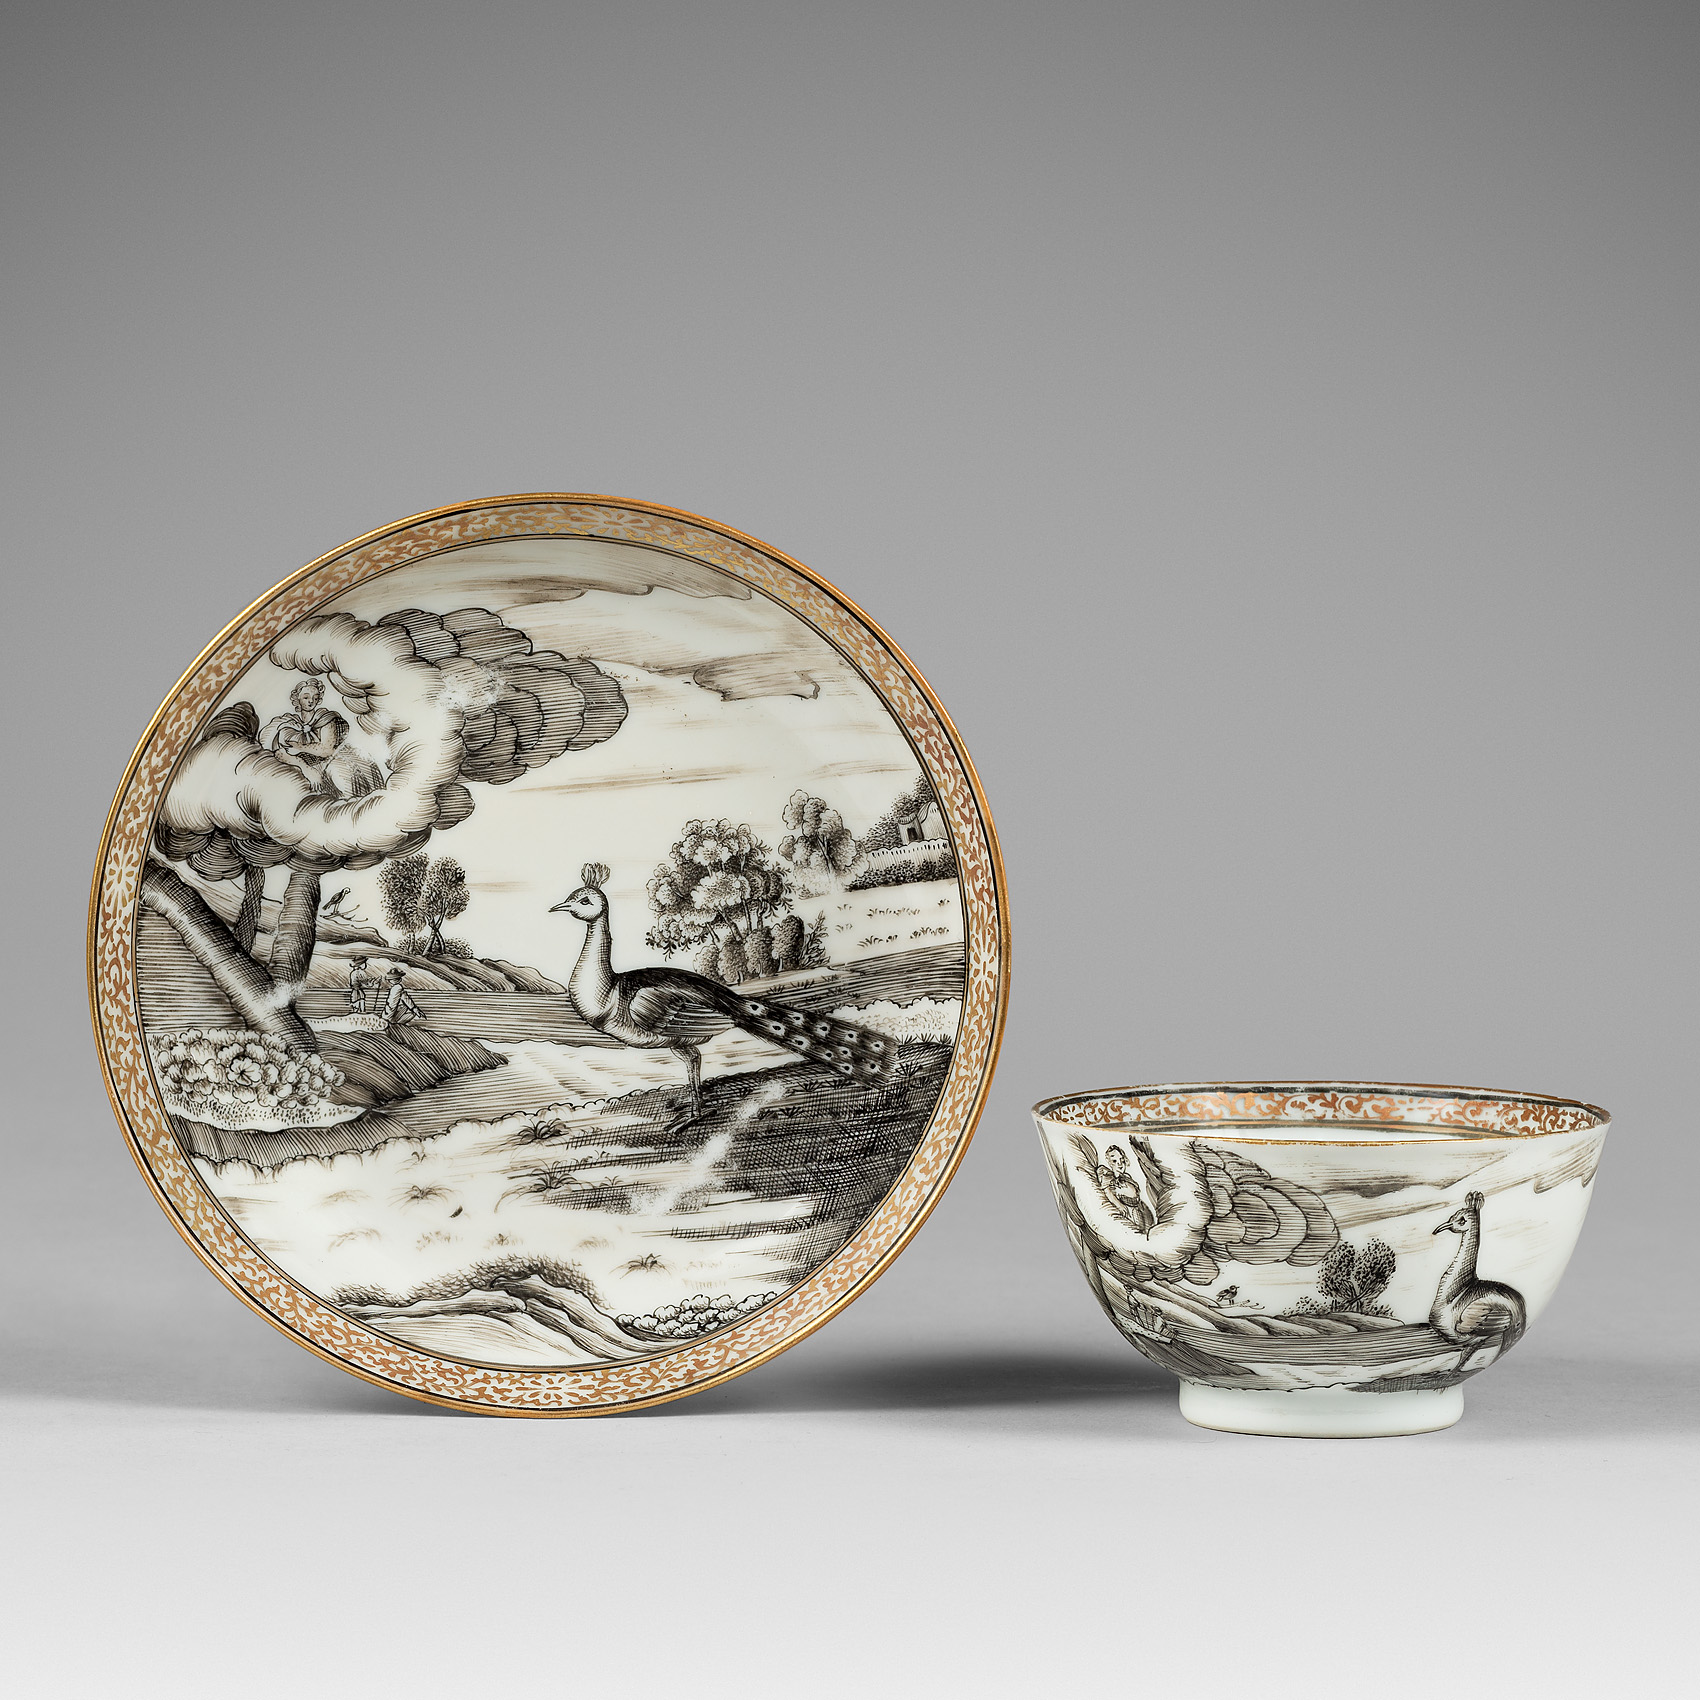 Porcelaine Qianlong (12736-1795), circa 1745, Chine